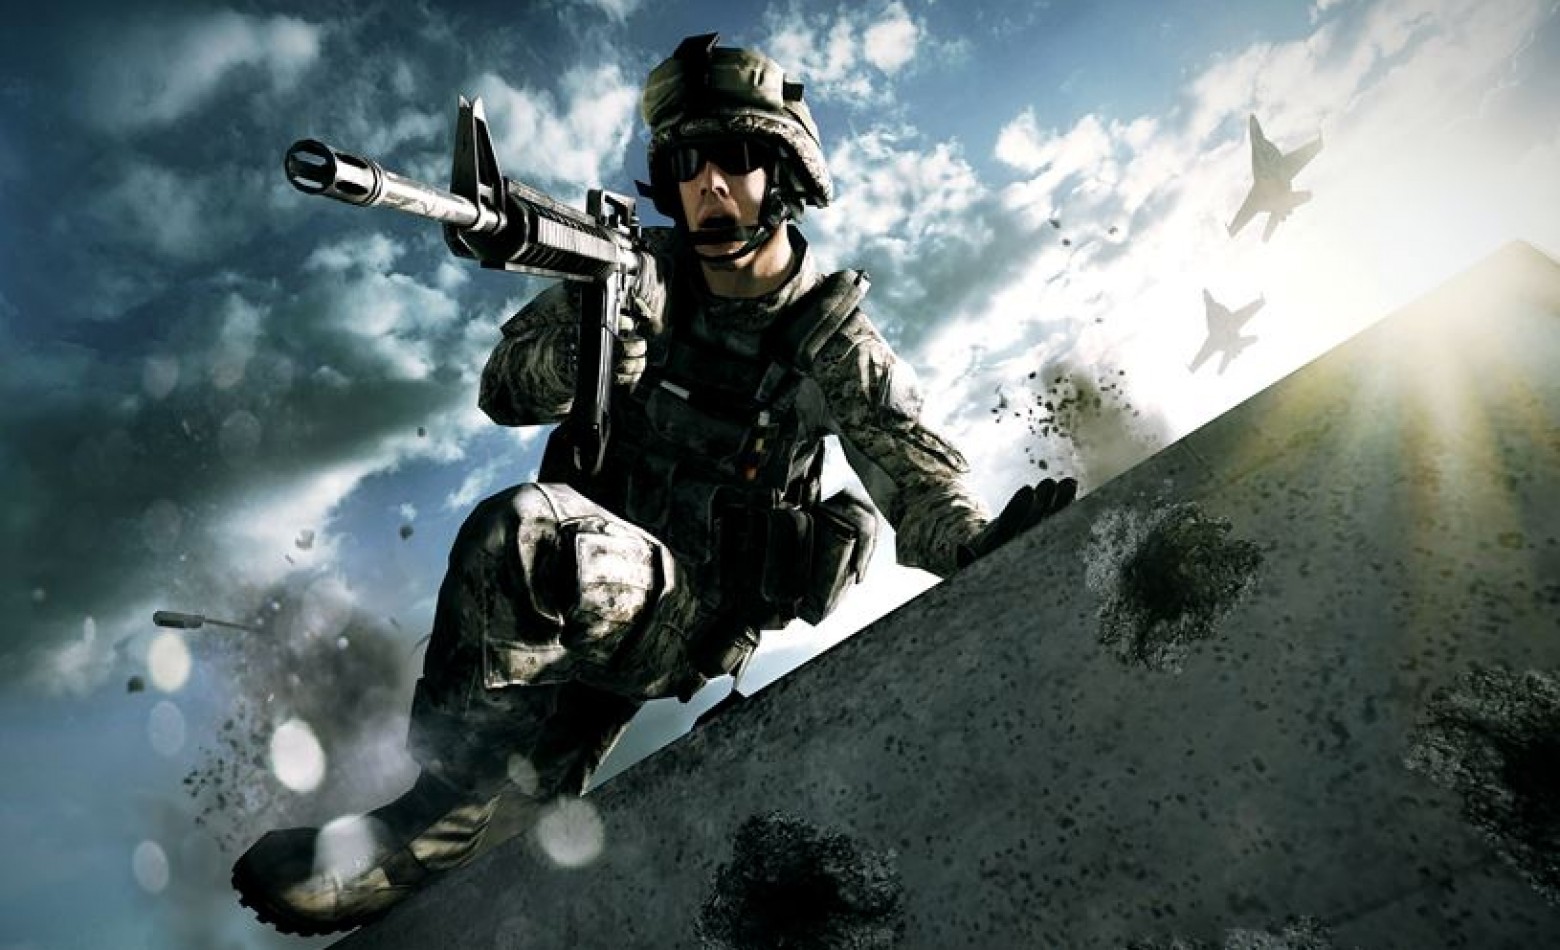 EA confirma o lançamento de novos DLCs para Battlefield 4